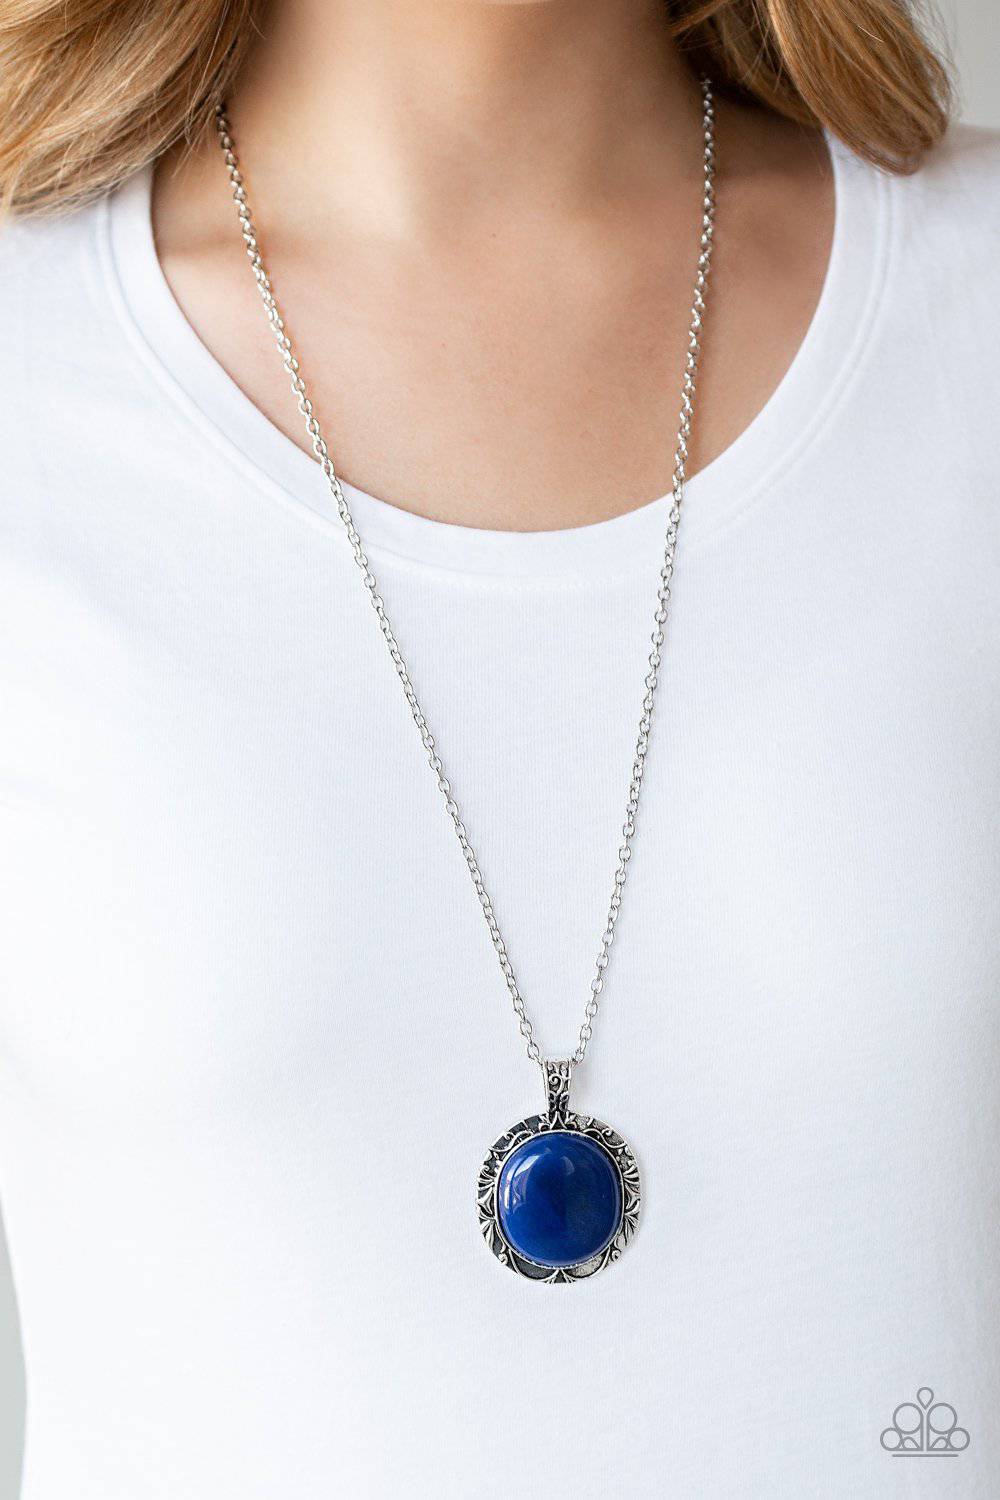 Stone Aura - Blue Leafy Filigree Pattern Necklace - Paparazzi Accessories - GlaMarous Titi Jewels